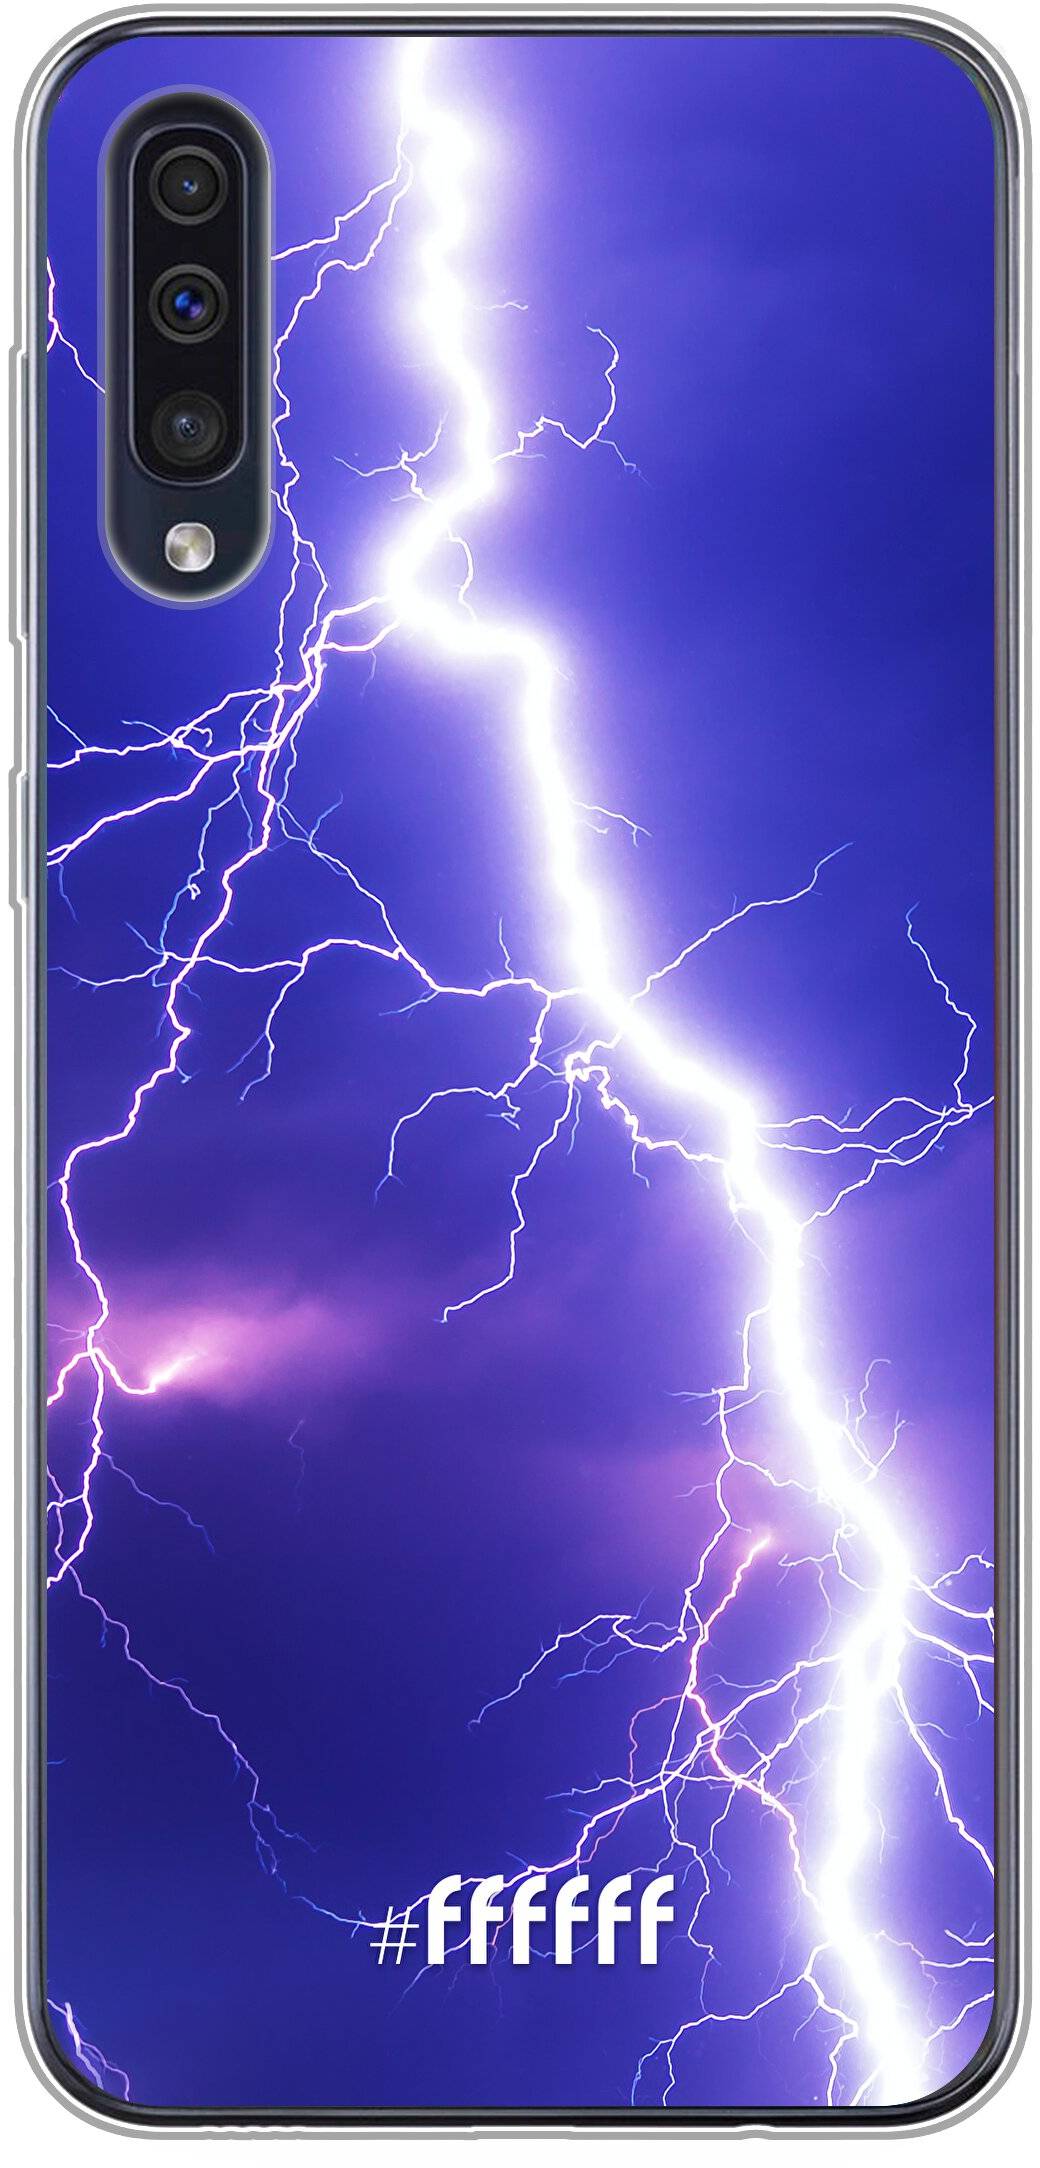 Thunderbolt Galaxy A50s